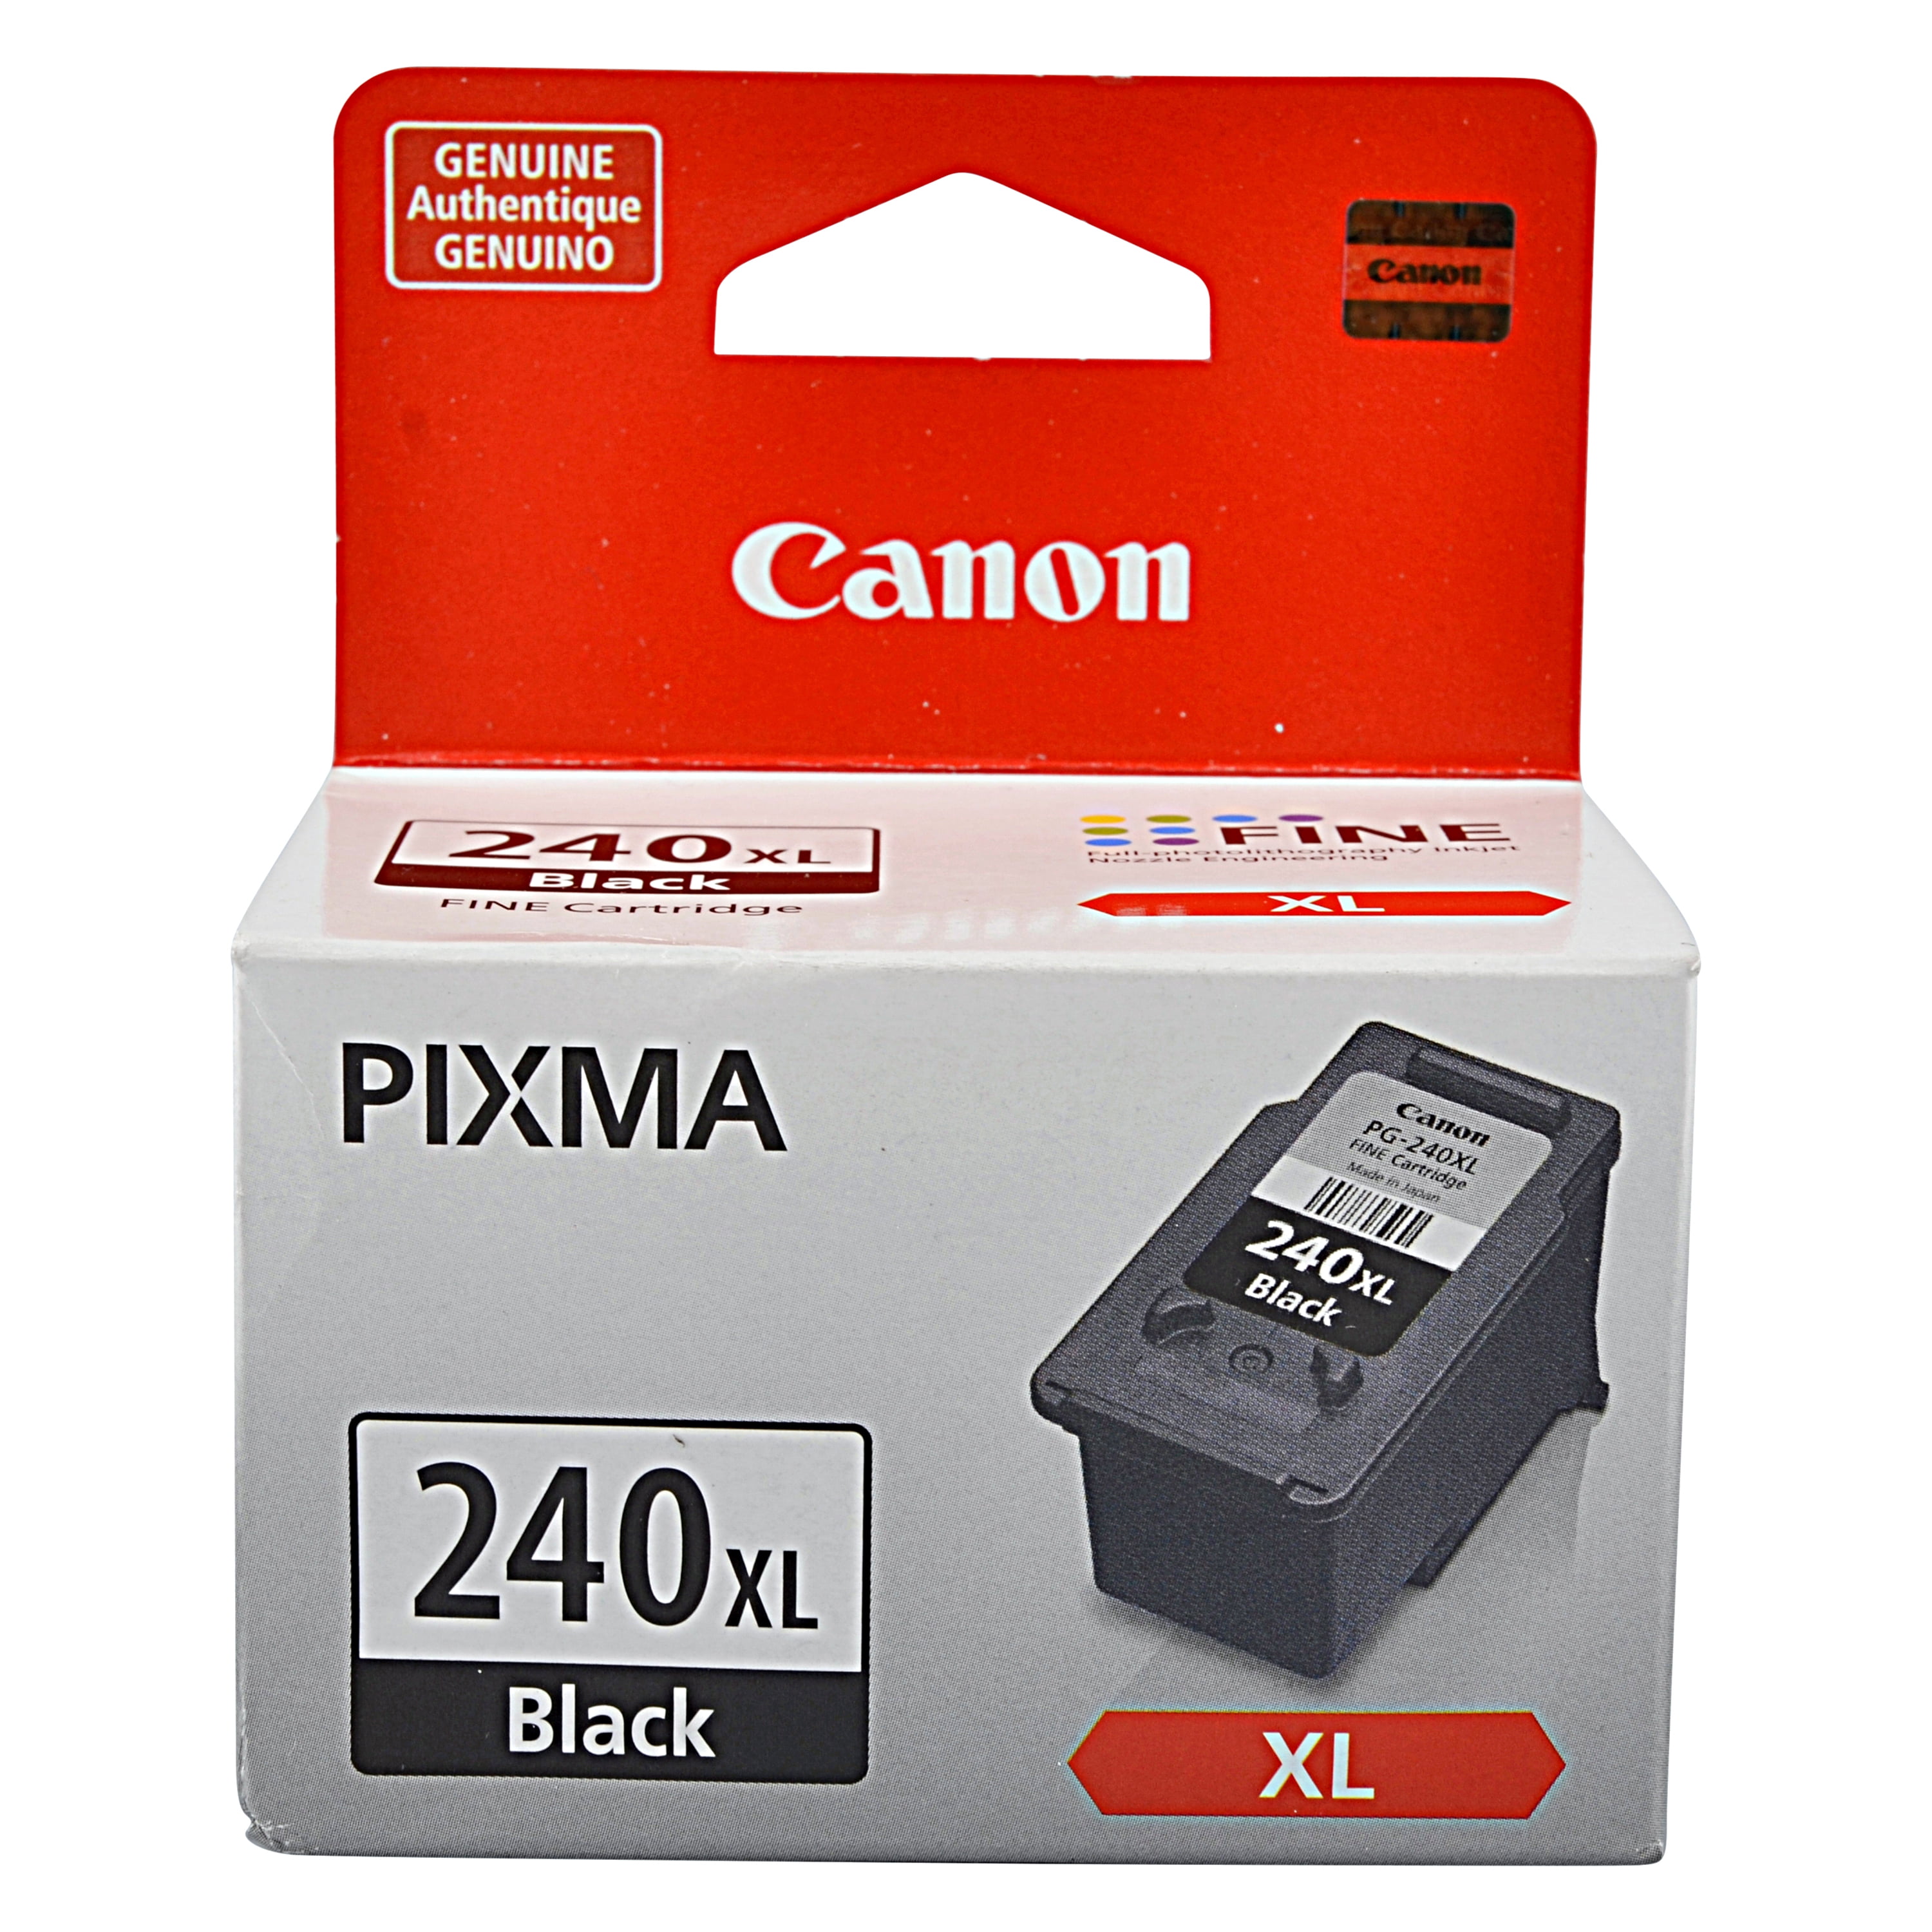 Canon Pixma Genuine Printer Ink Black 240XL - Walmart.com - Walmart.com